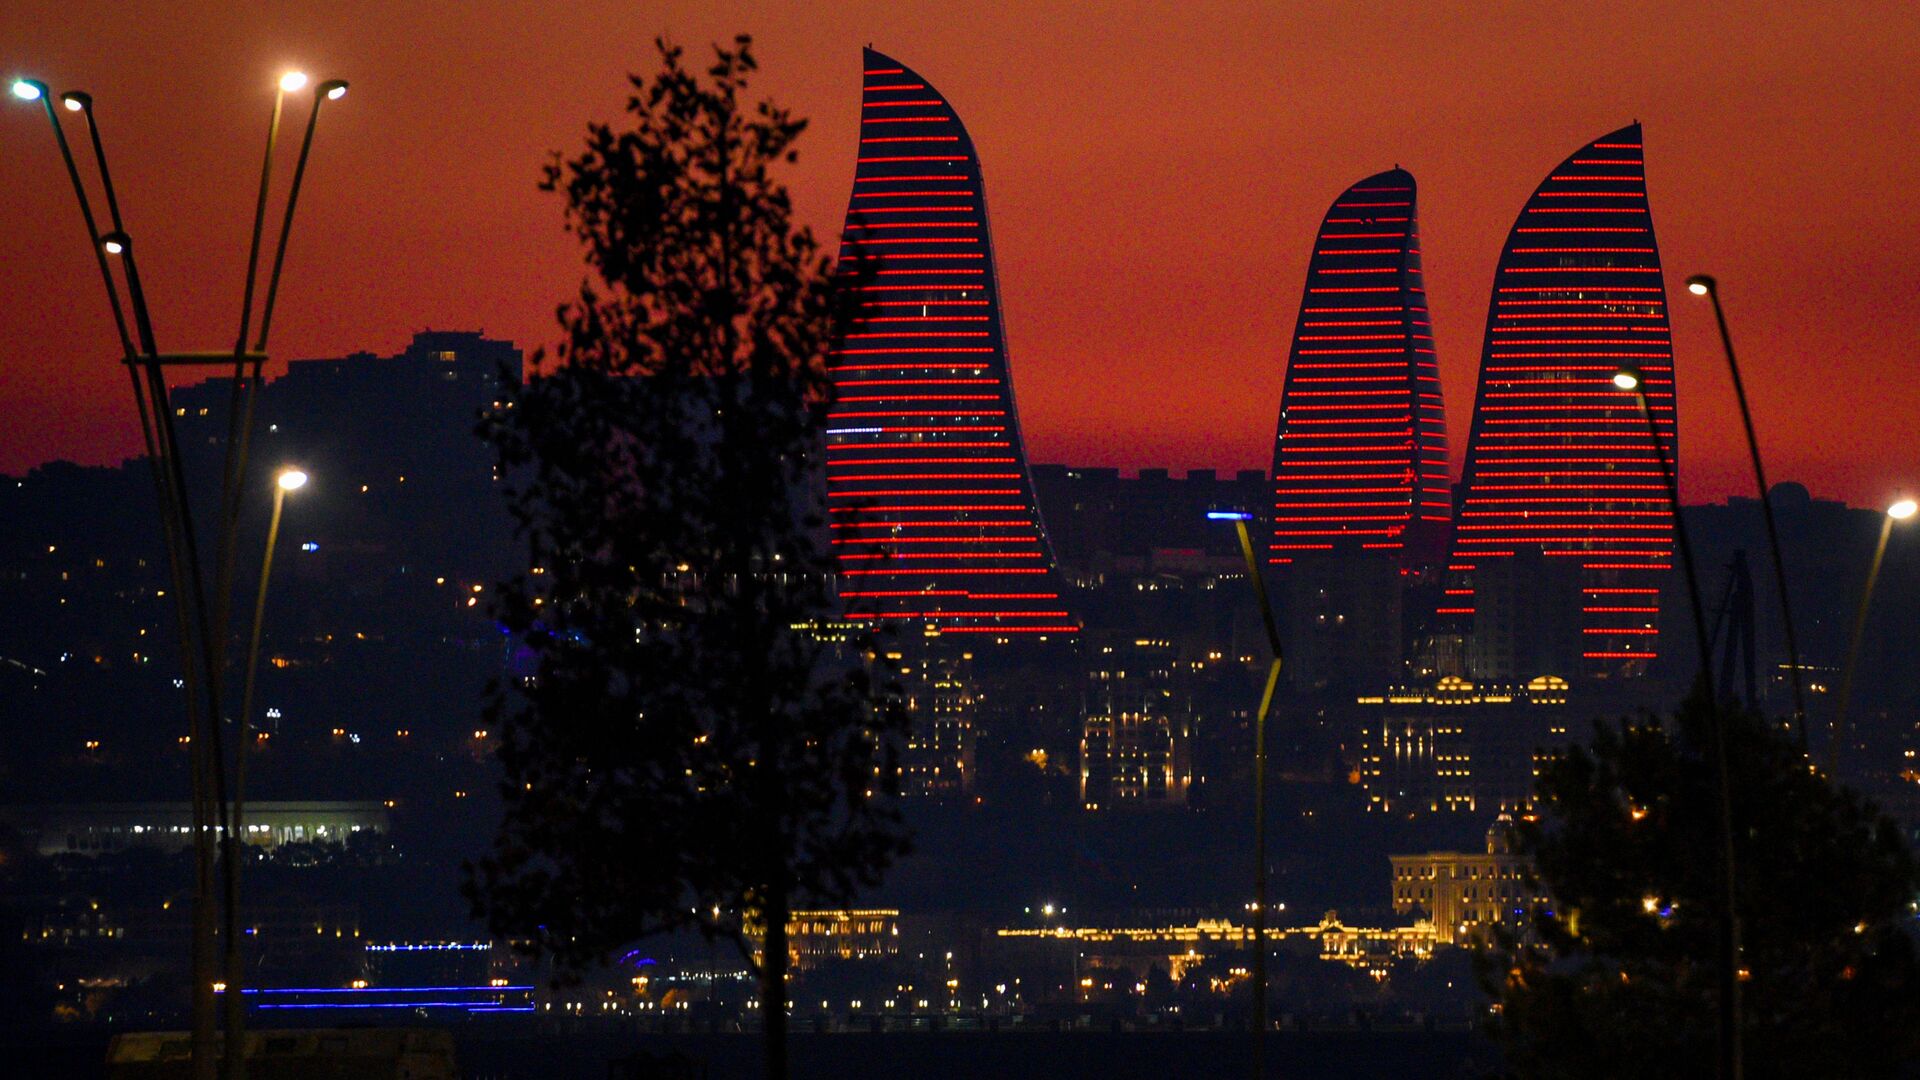 Вид на Пламенные башни (Flame Towers) в Баку, фото из архива - Sputnik Азербайджан, 1920, 01.06.2022